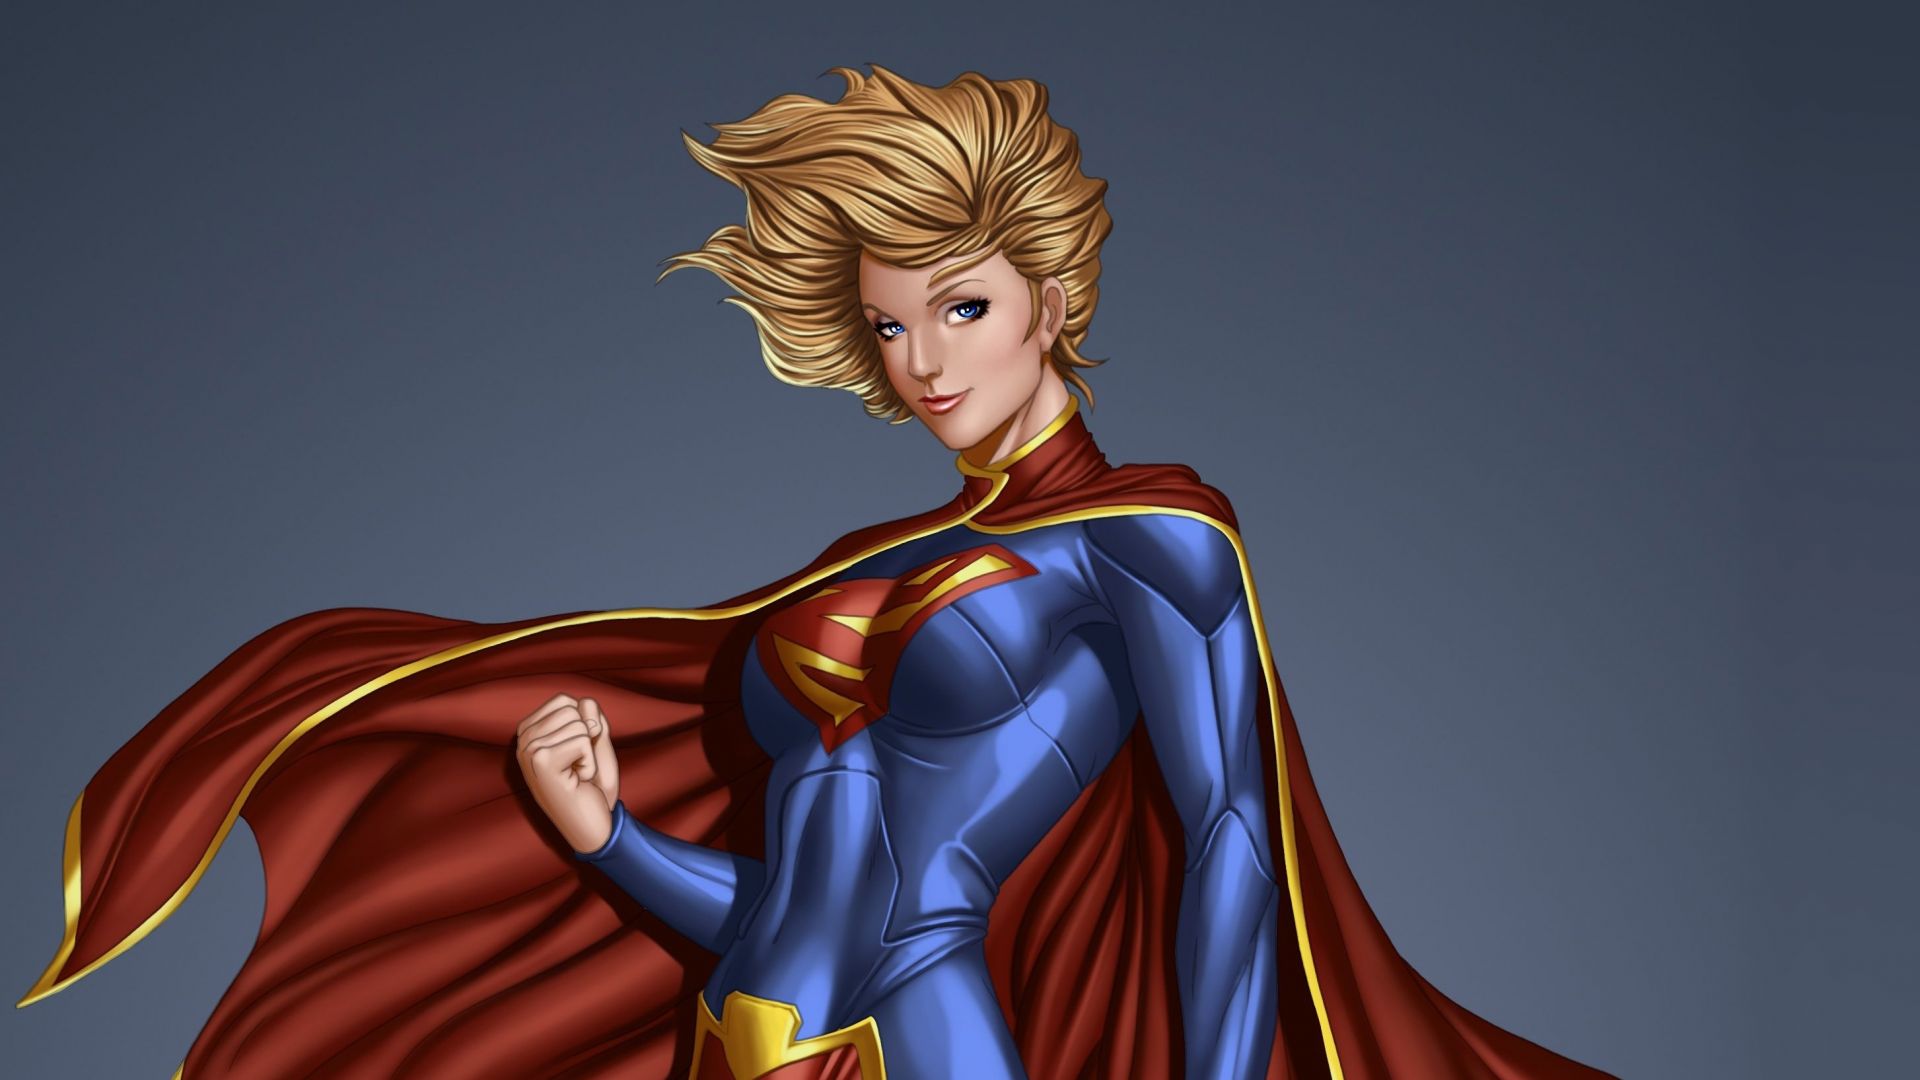 Arts, supergirl, blonde, superhero wallpaper, HD image, picture, background, 88d410